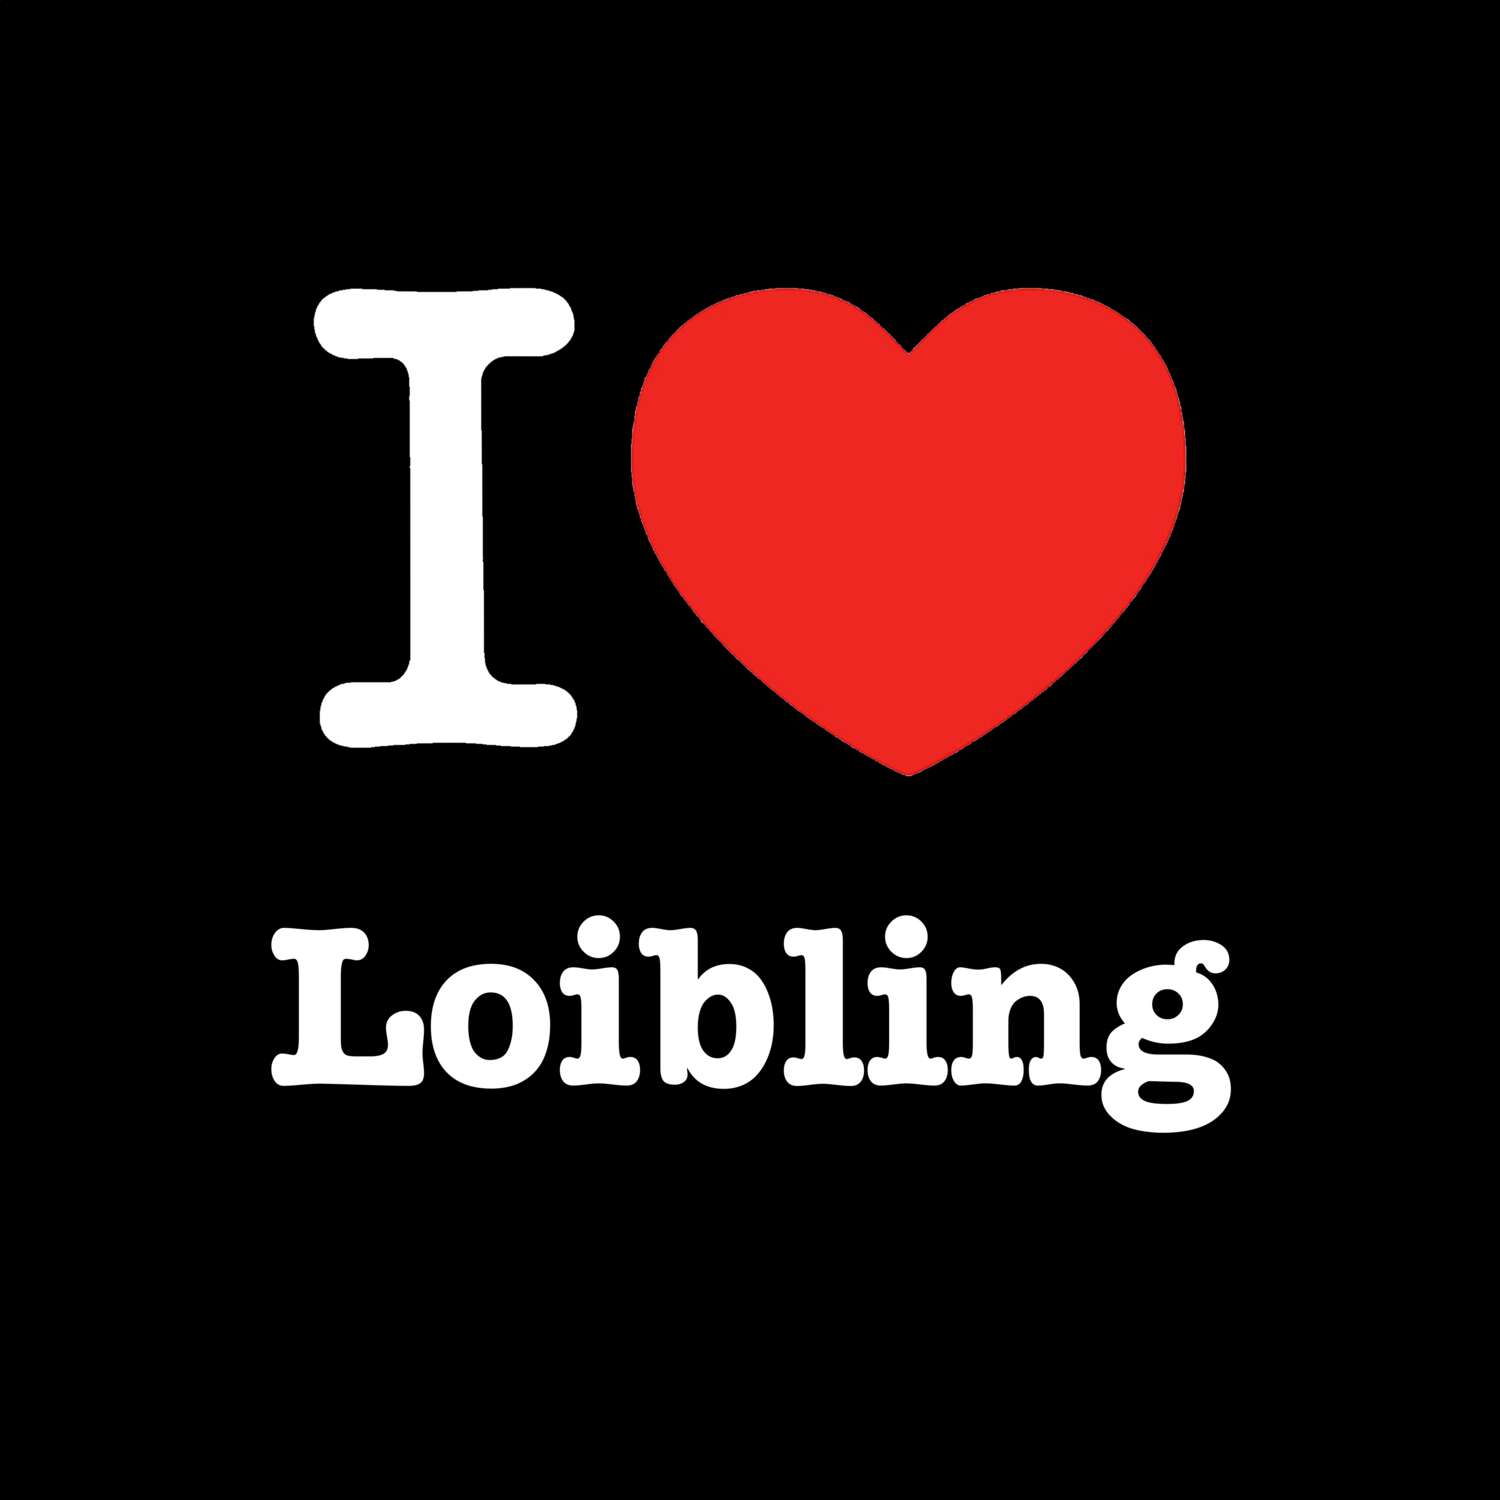 Loibling T-Shirt »I love«